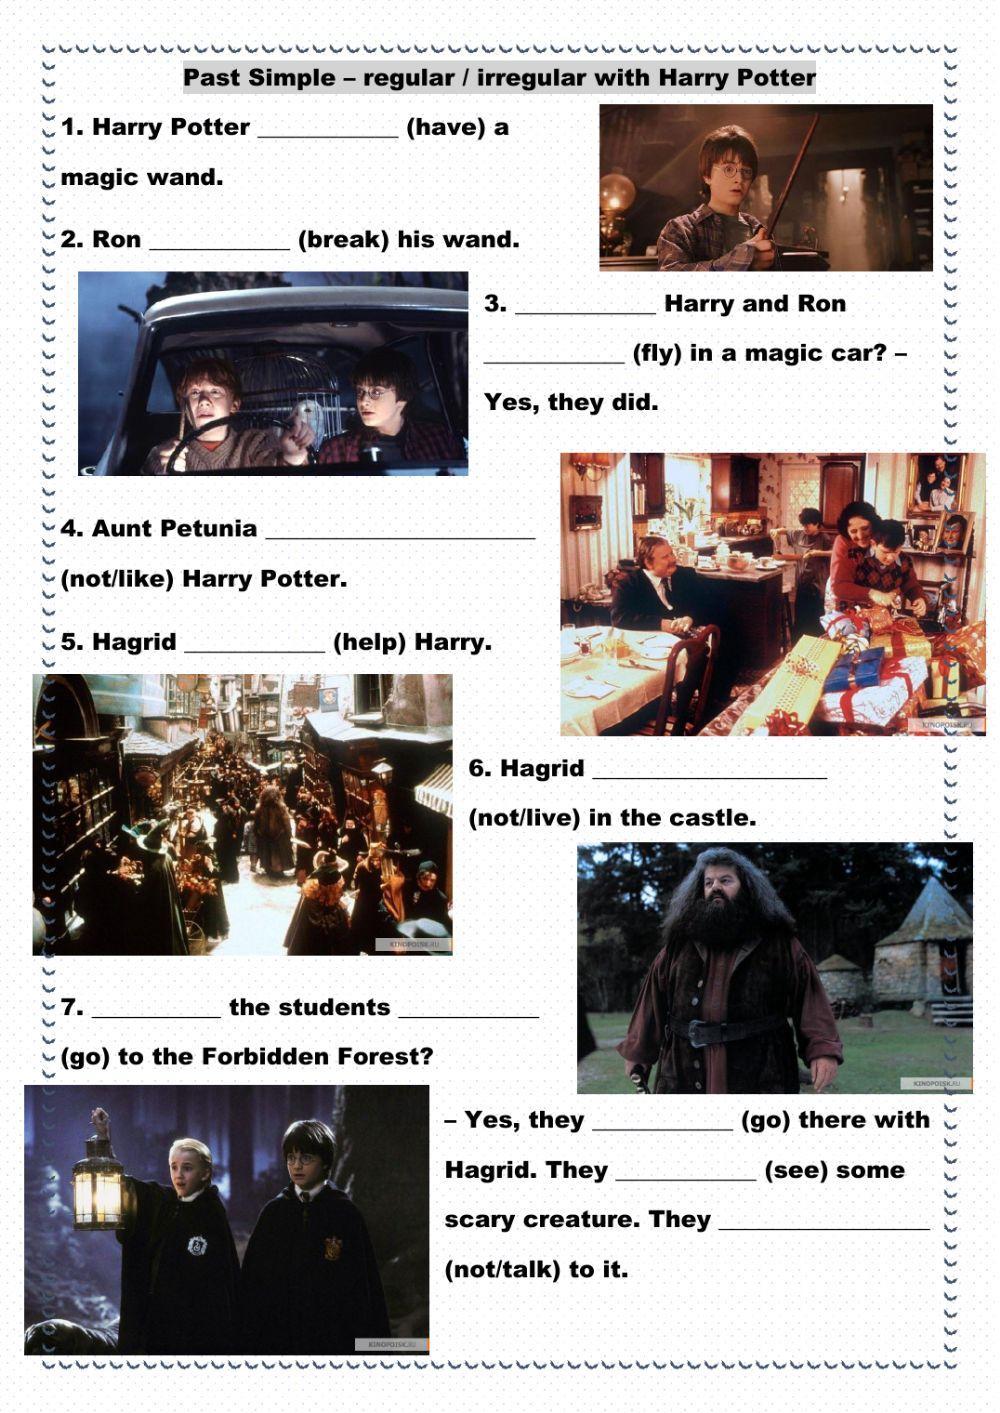 Harry Potter - Past Simple (regular&irregular)